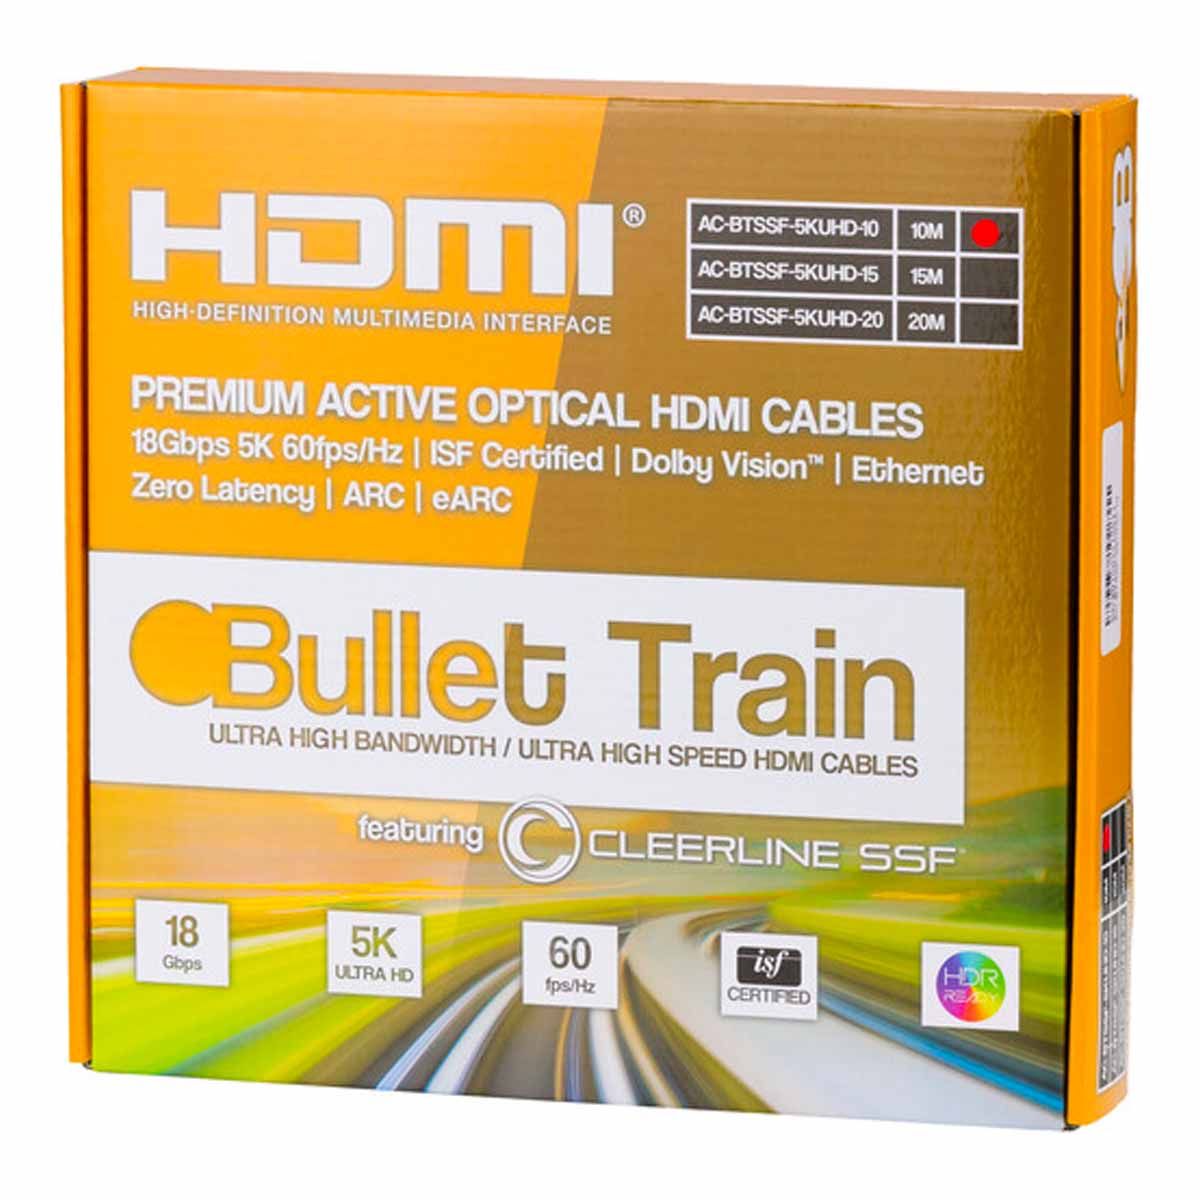 Bullet Train 5K HDMI